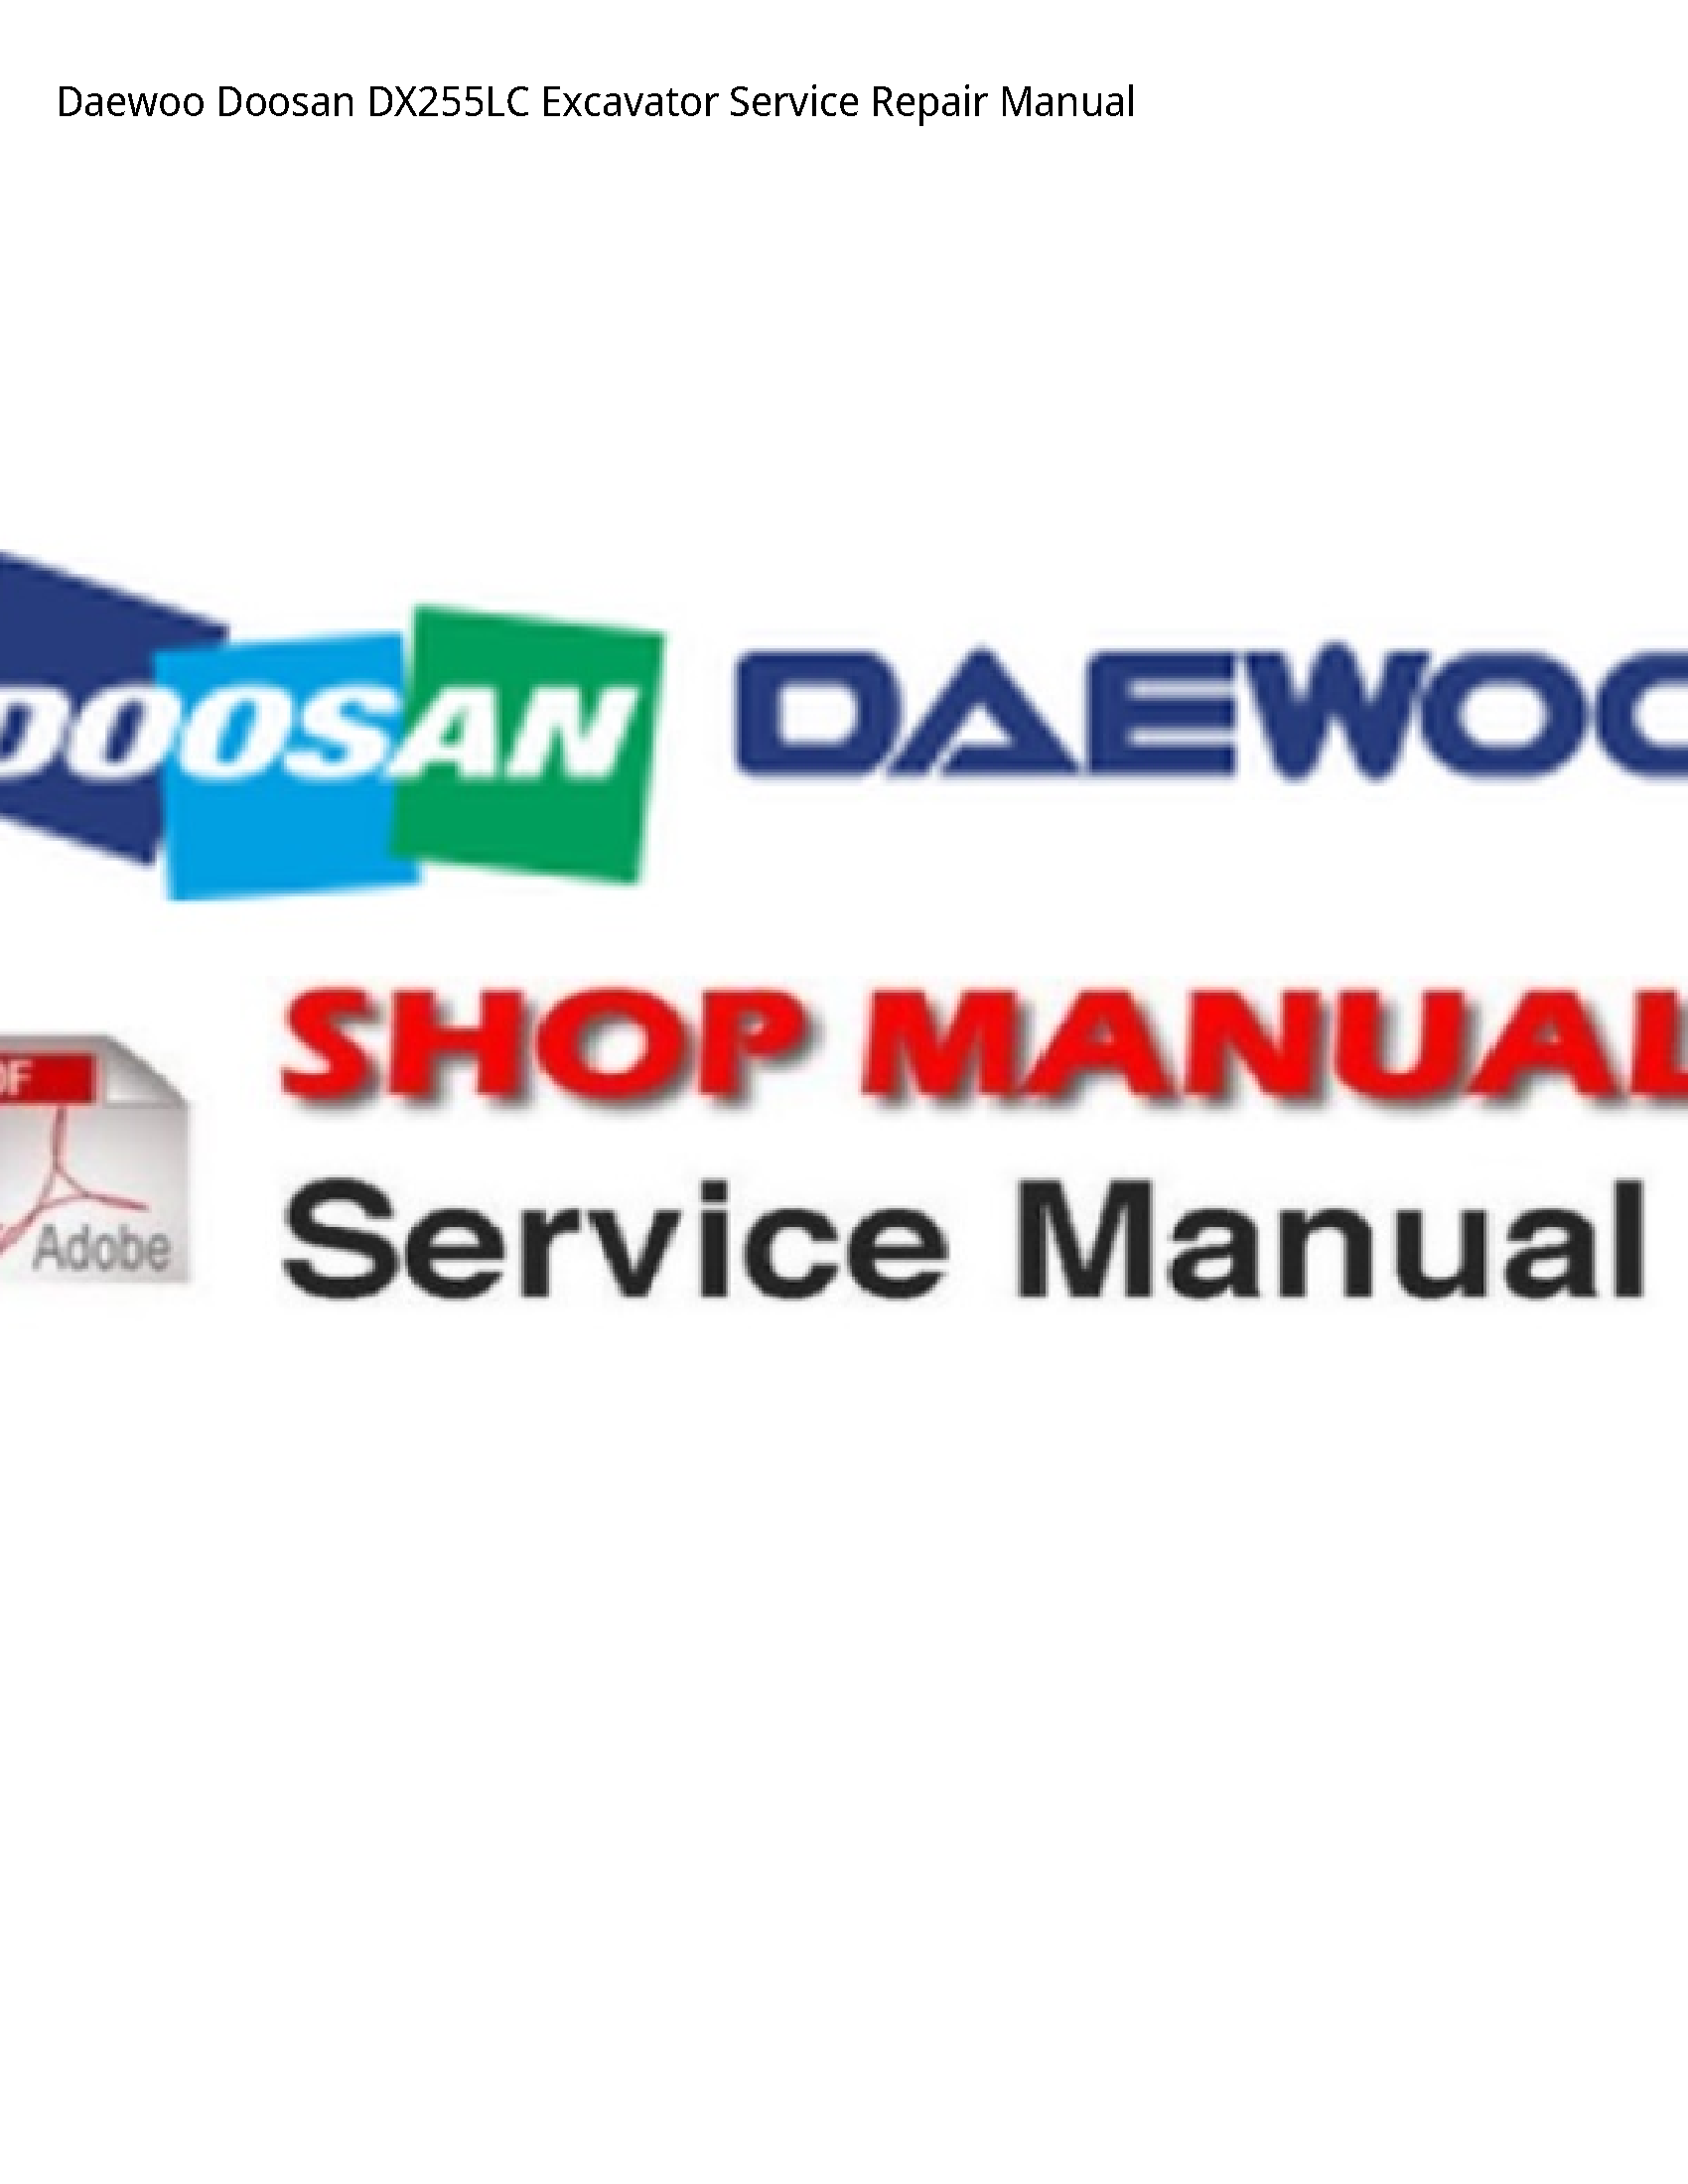 Daewoo Doosan DX255LC Excavator manual